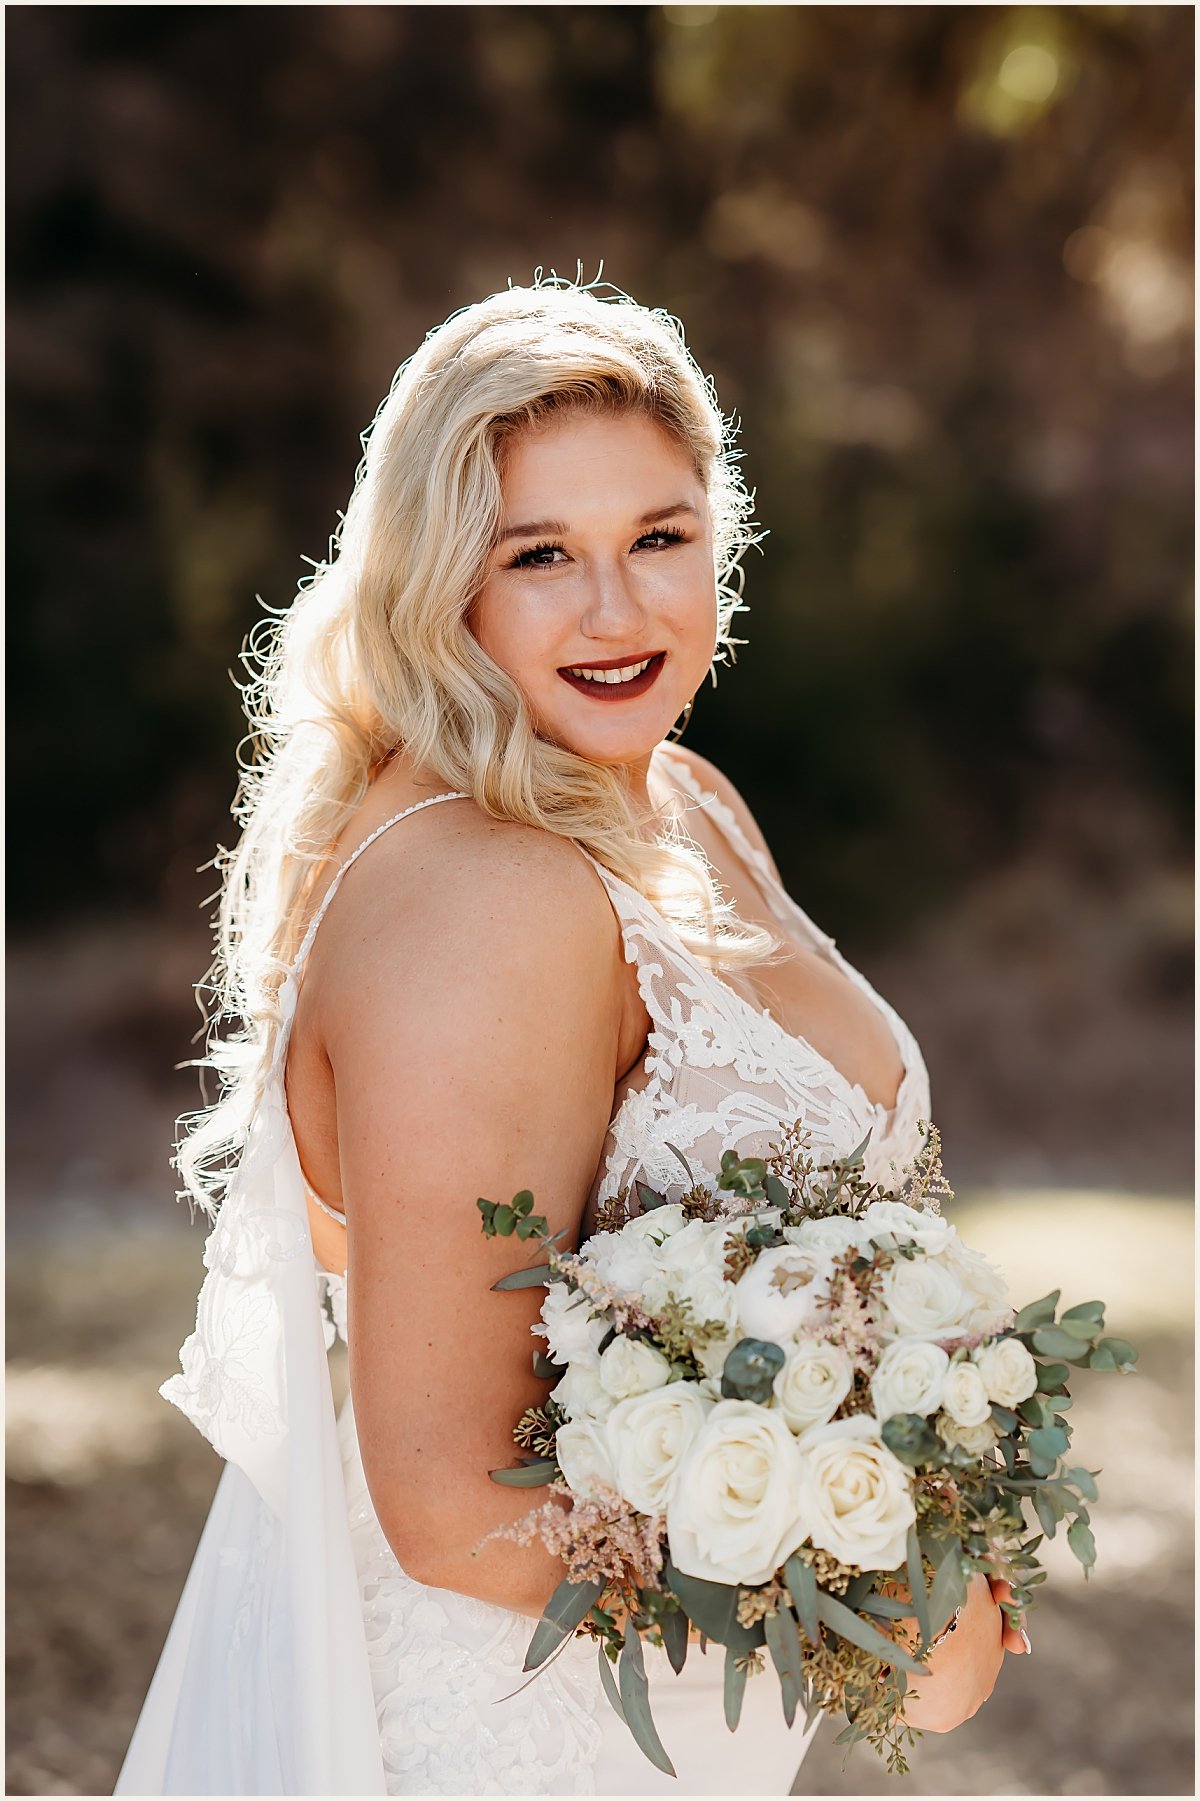 Bridal hill country wedding portraits | Lauren Crumpler Photography | Texas Wedding Photographer